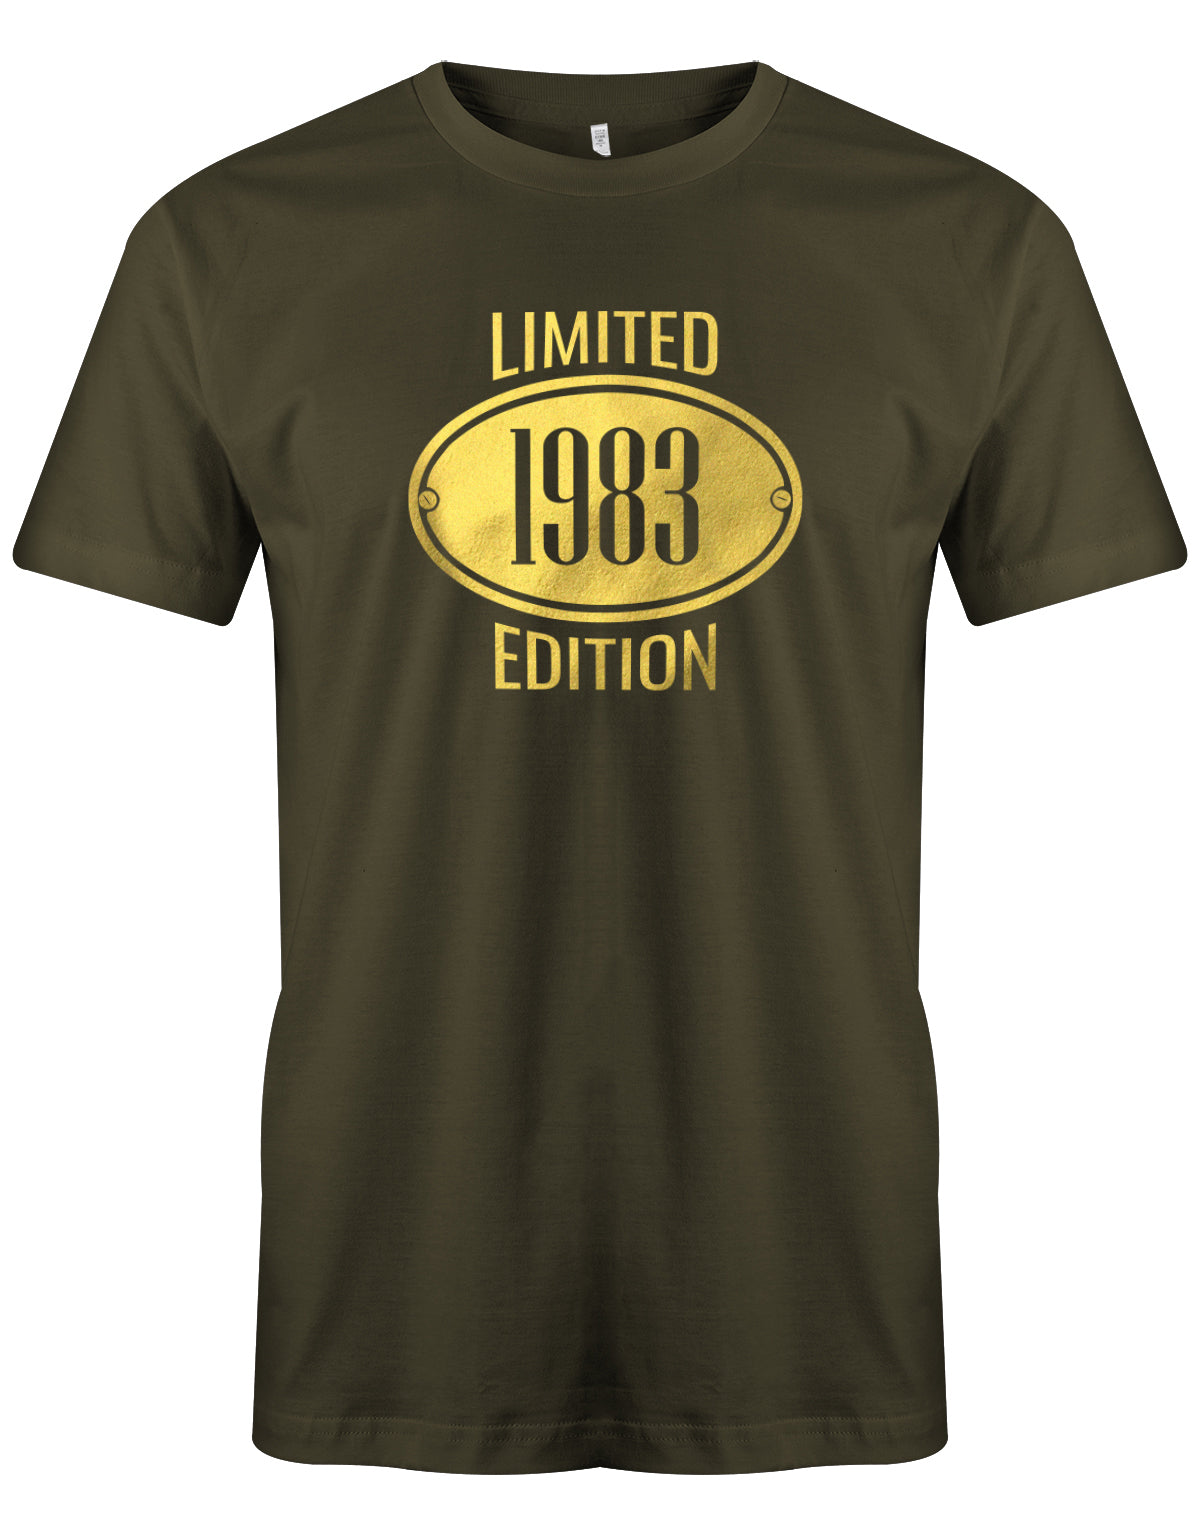 Limited Edition Gold 1983 - T-Shirt 40 Geburtstag Männer myShirtStore Army